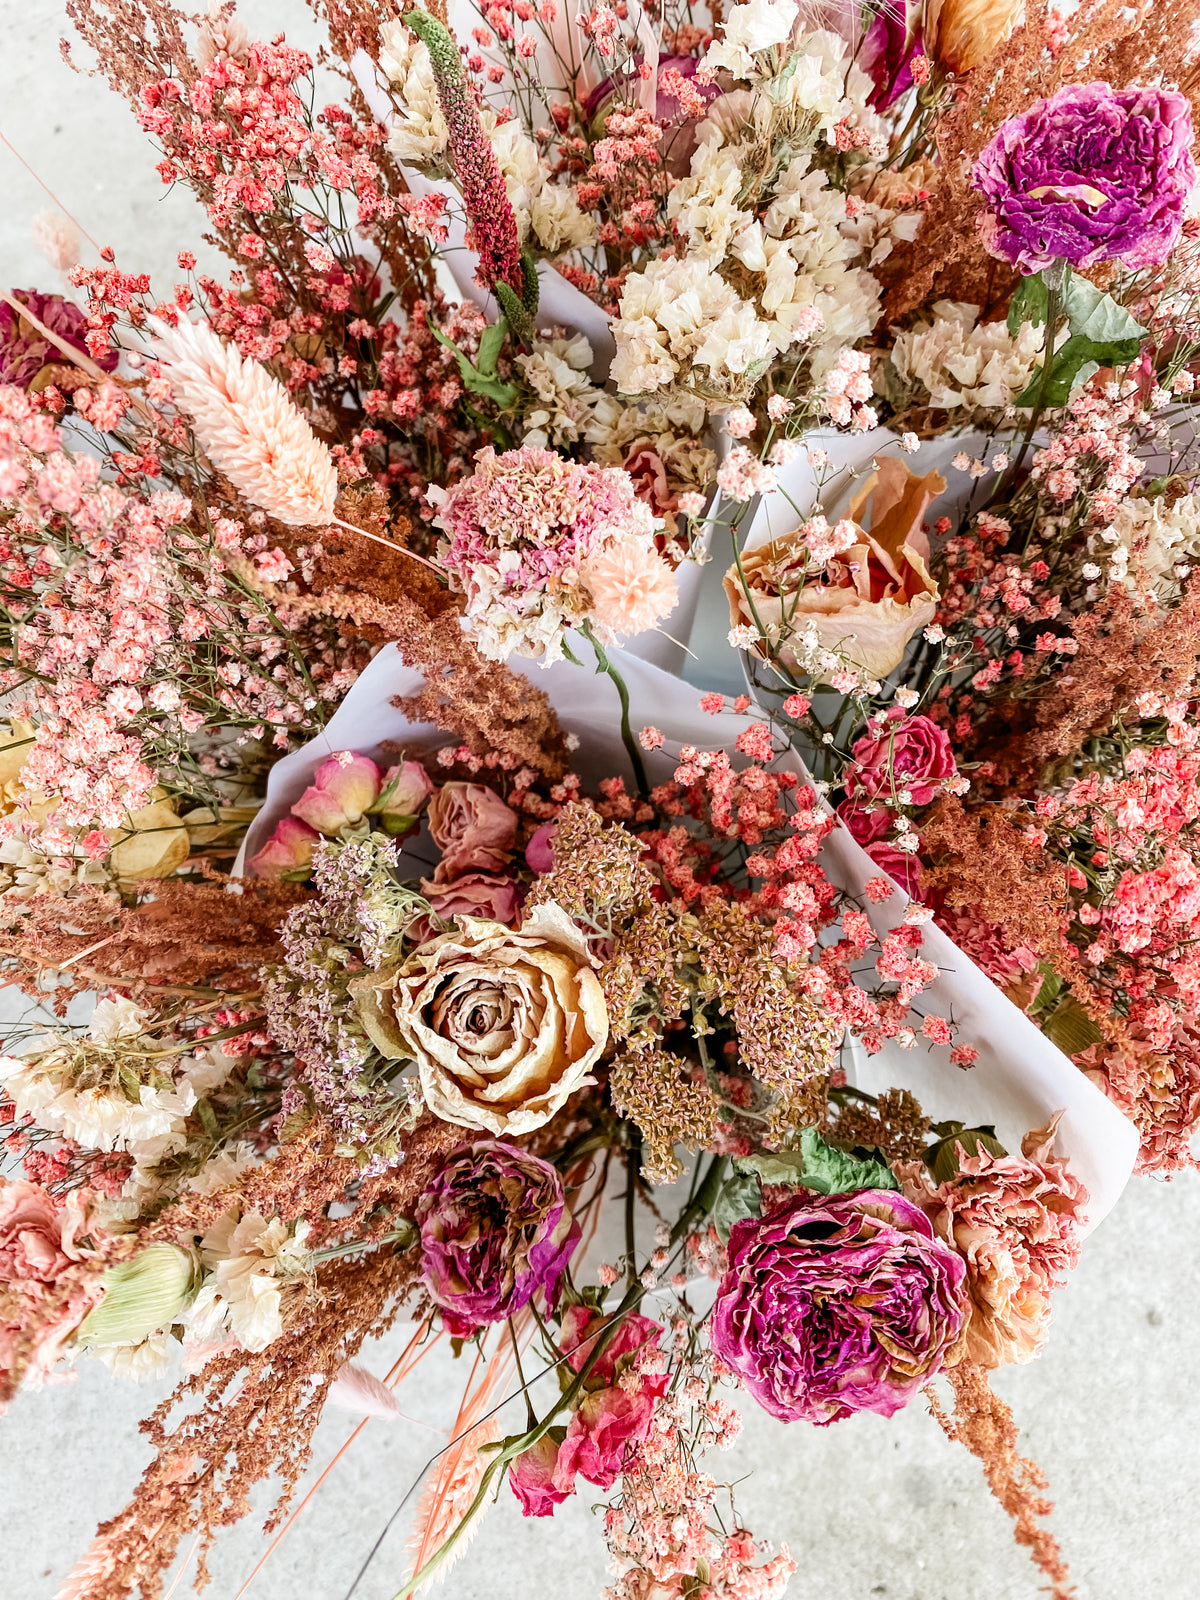 Dried Flower Bouquet - Pretty n’ Pink